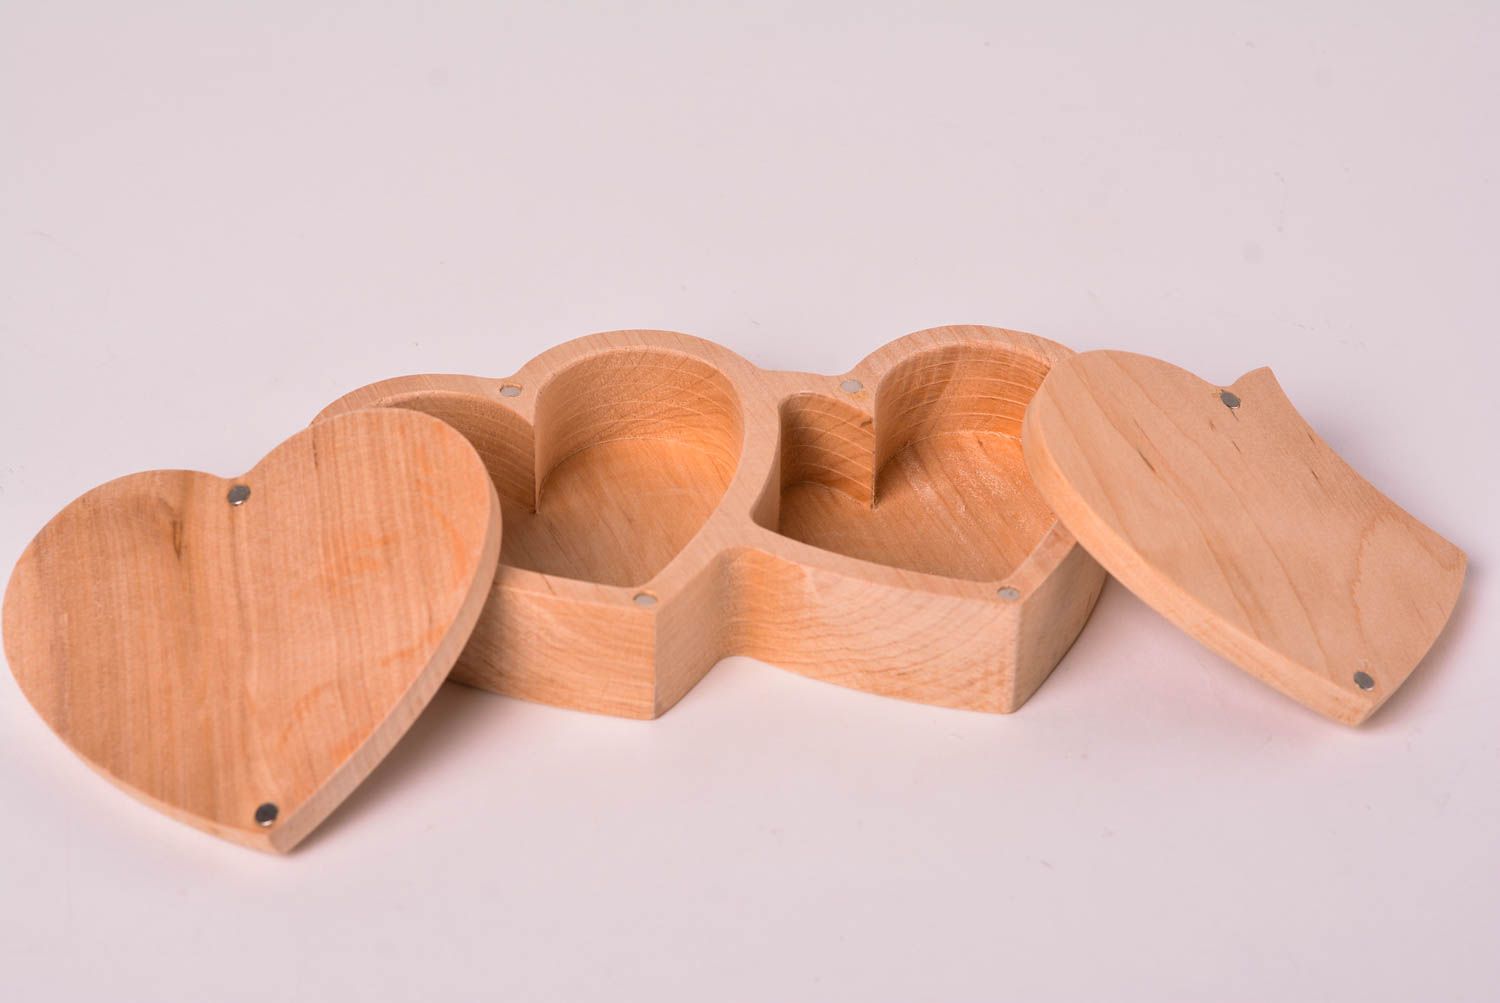 BUY Stylish handmade wooden box wood craft ideas jewelry box design